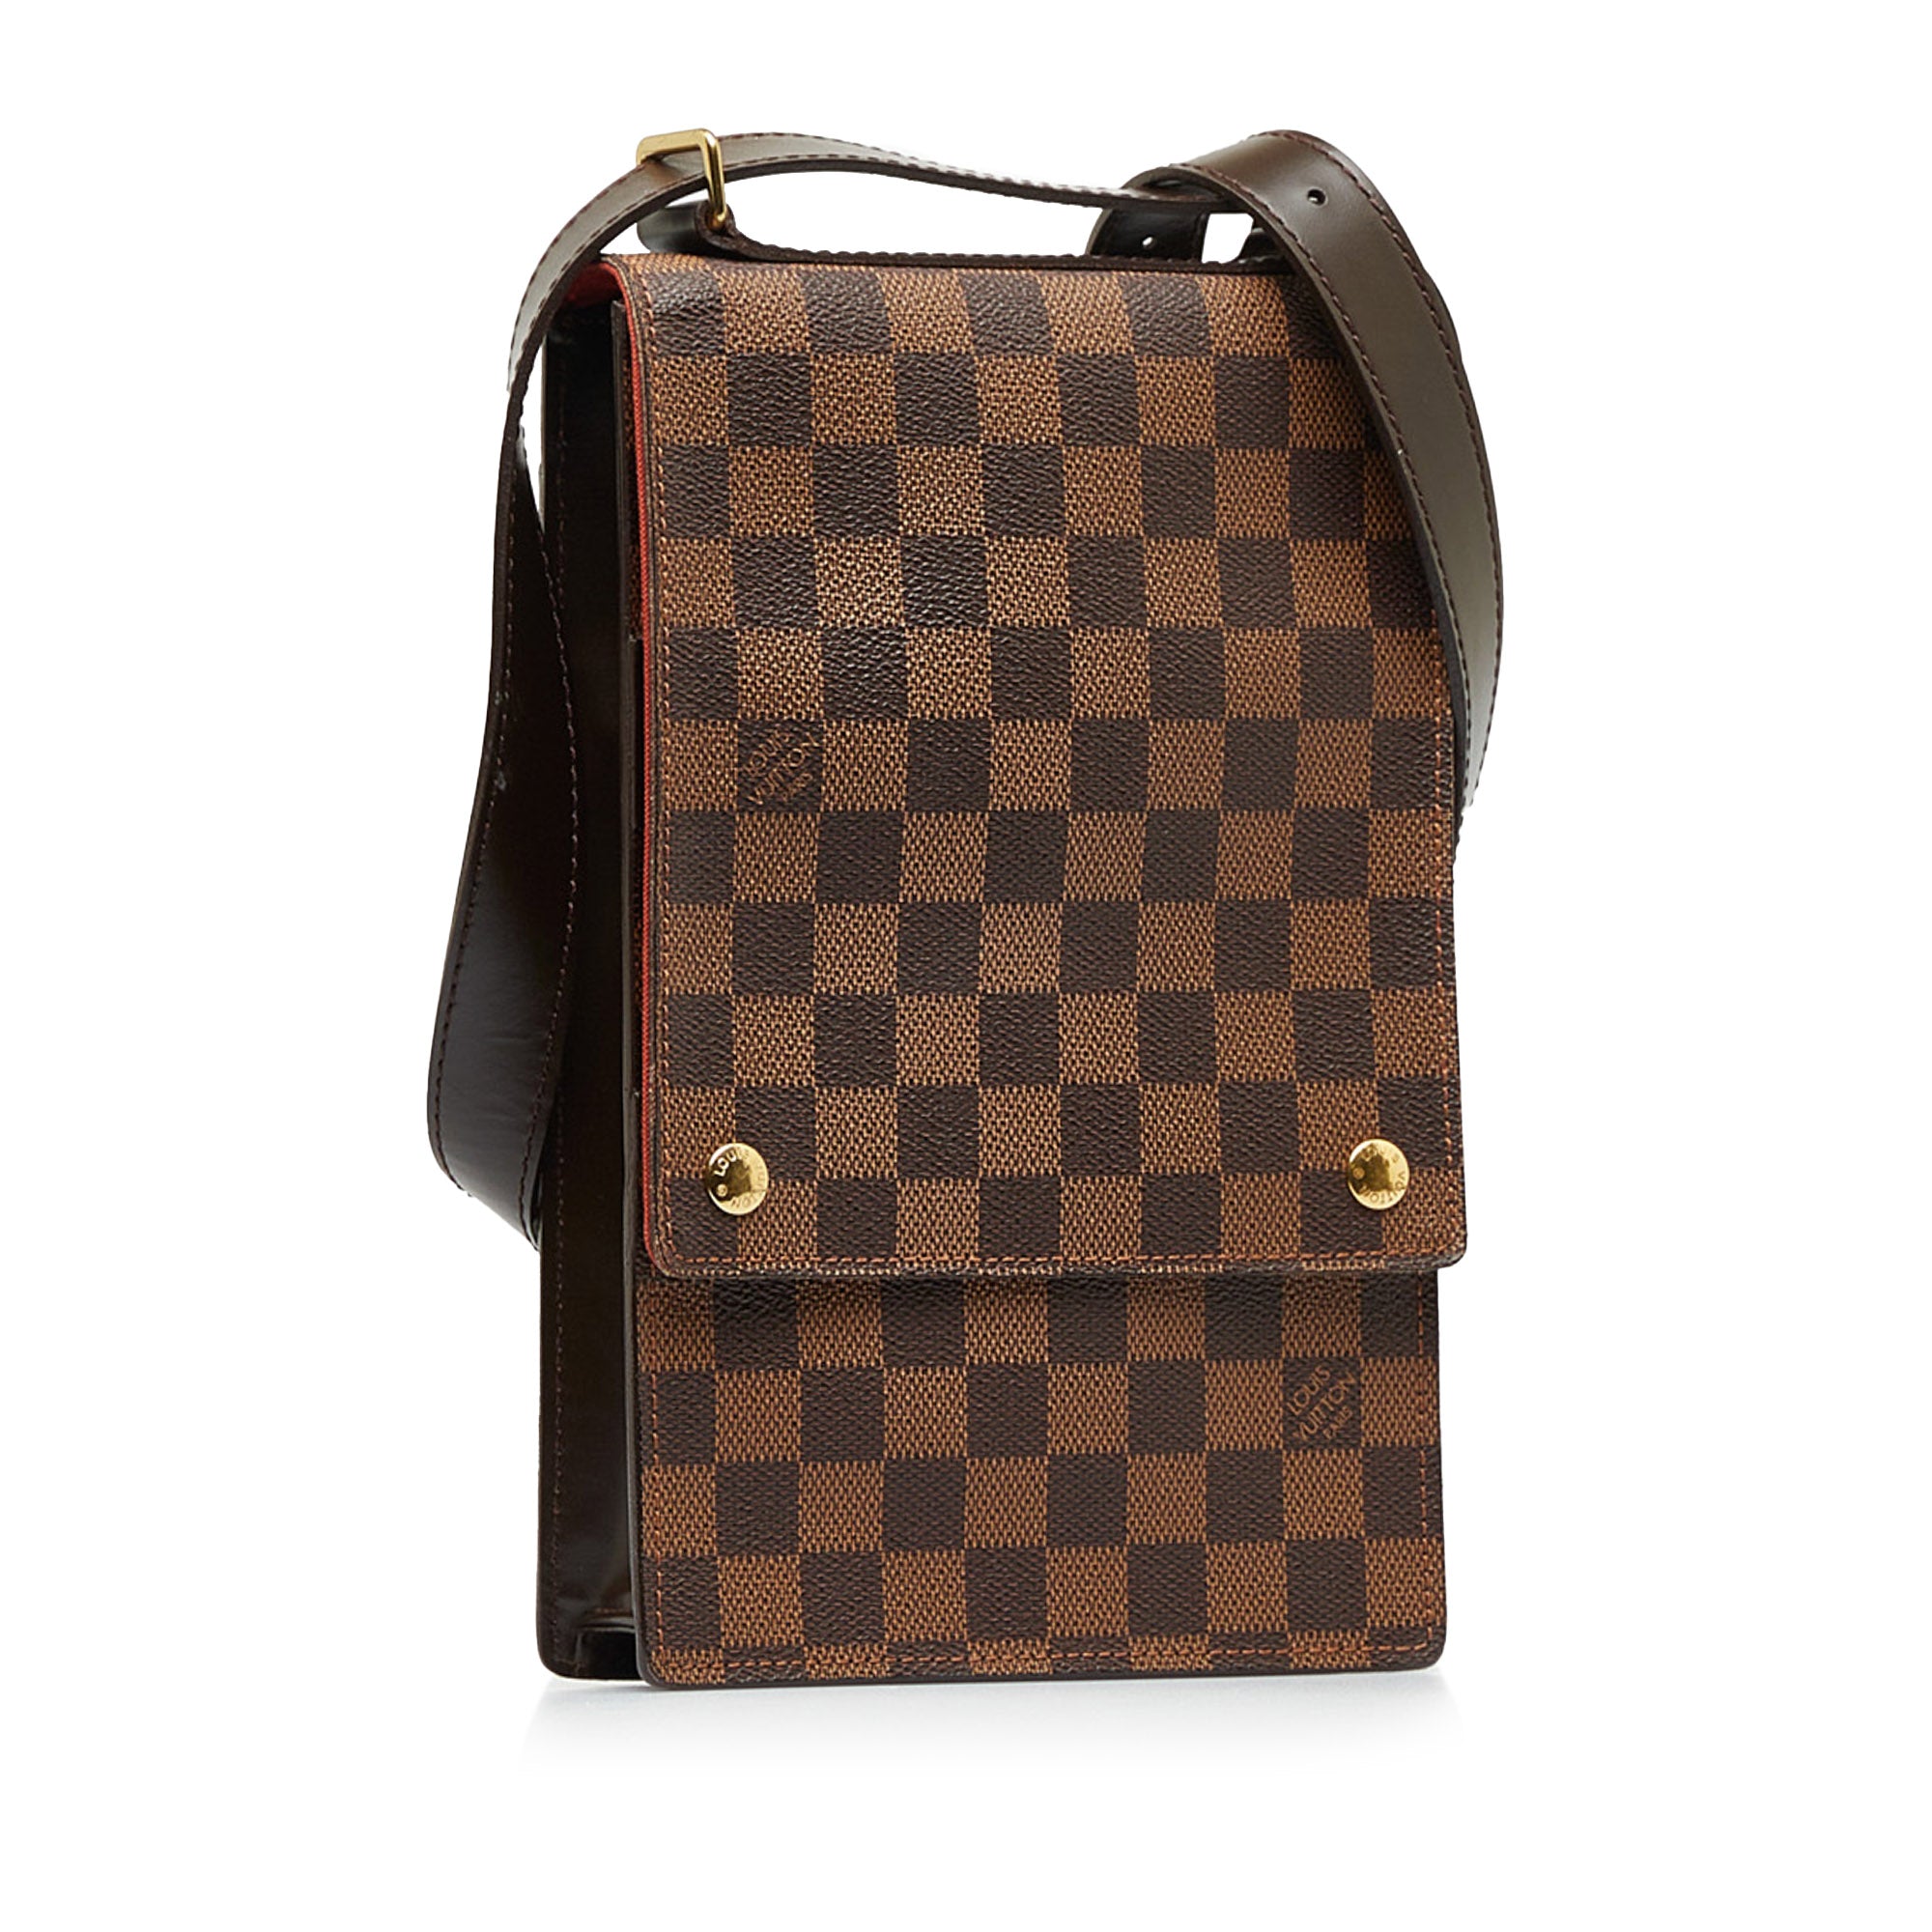 Authentic Louis Vuitton Portobello PM Damier Handbag Purse